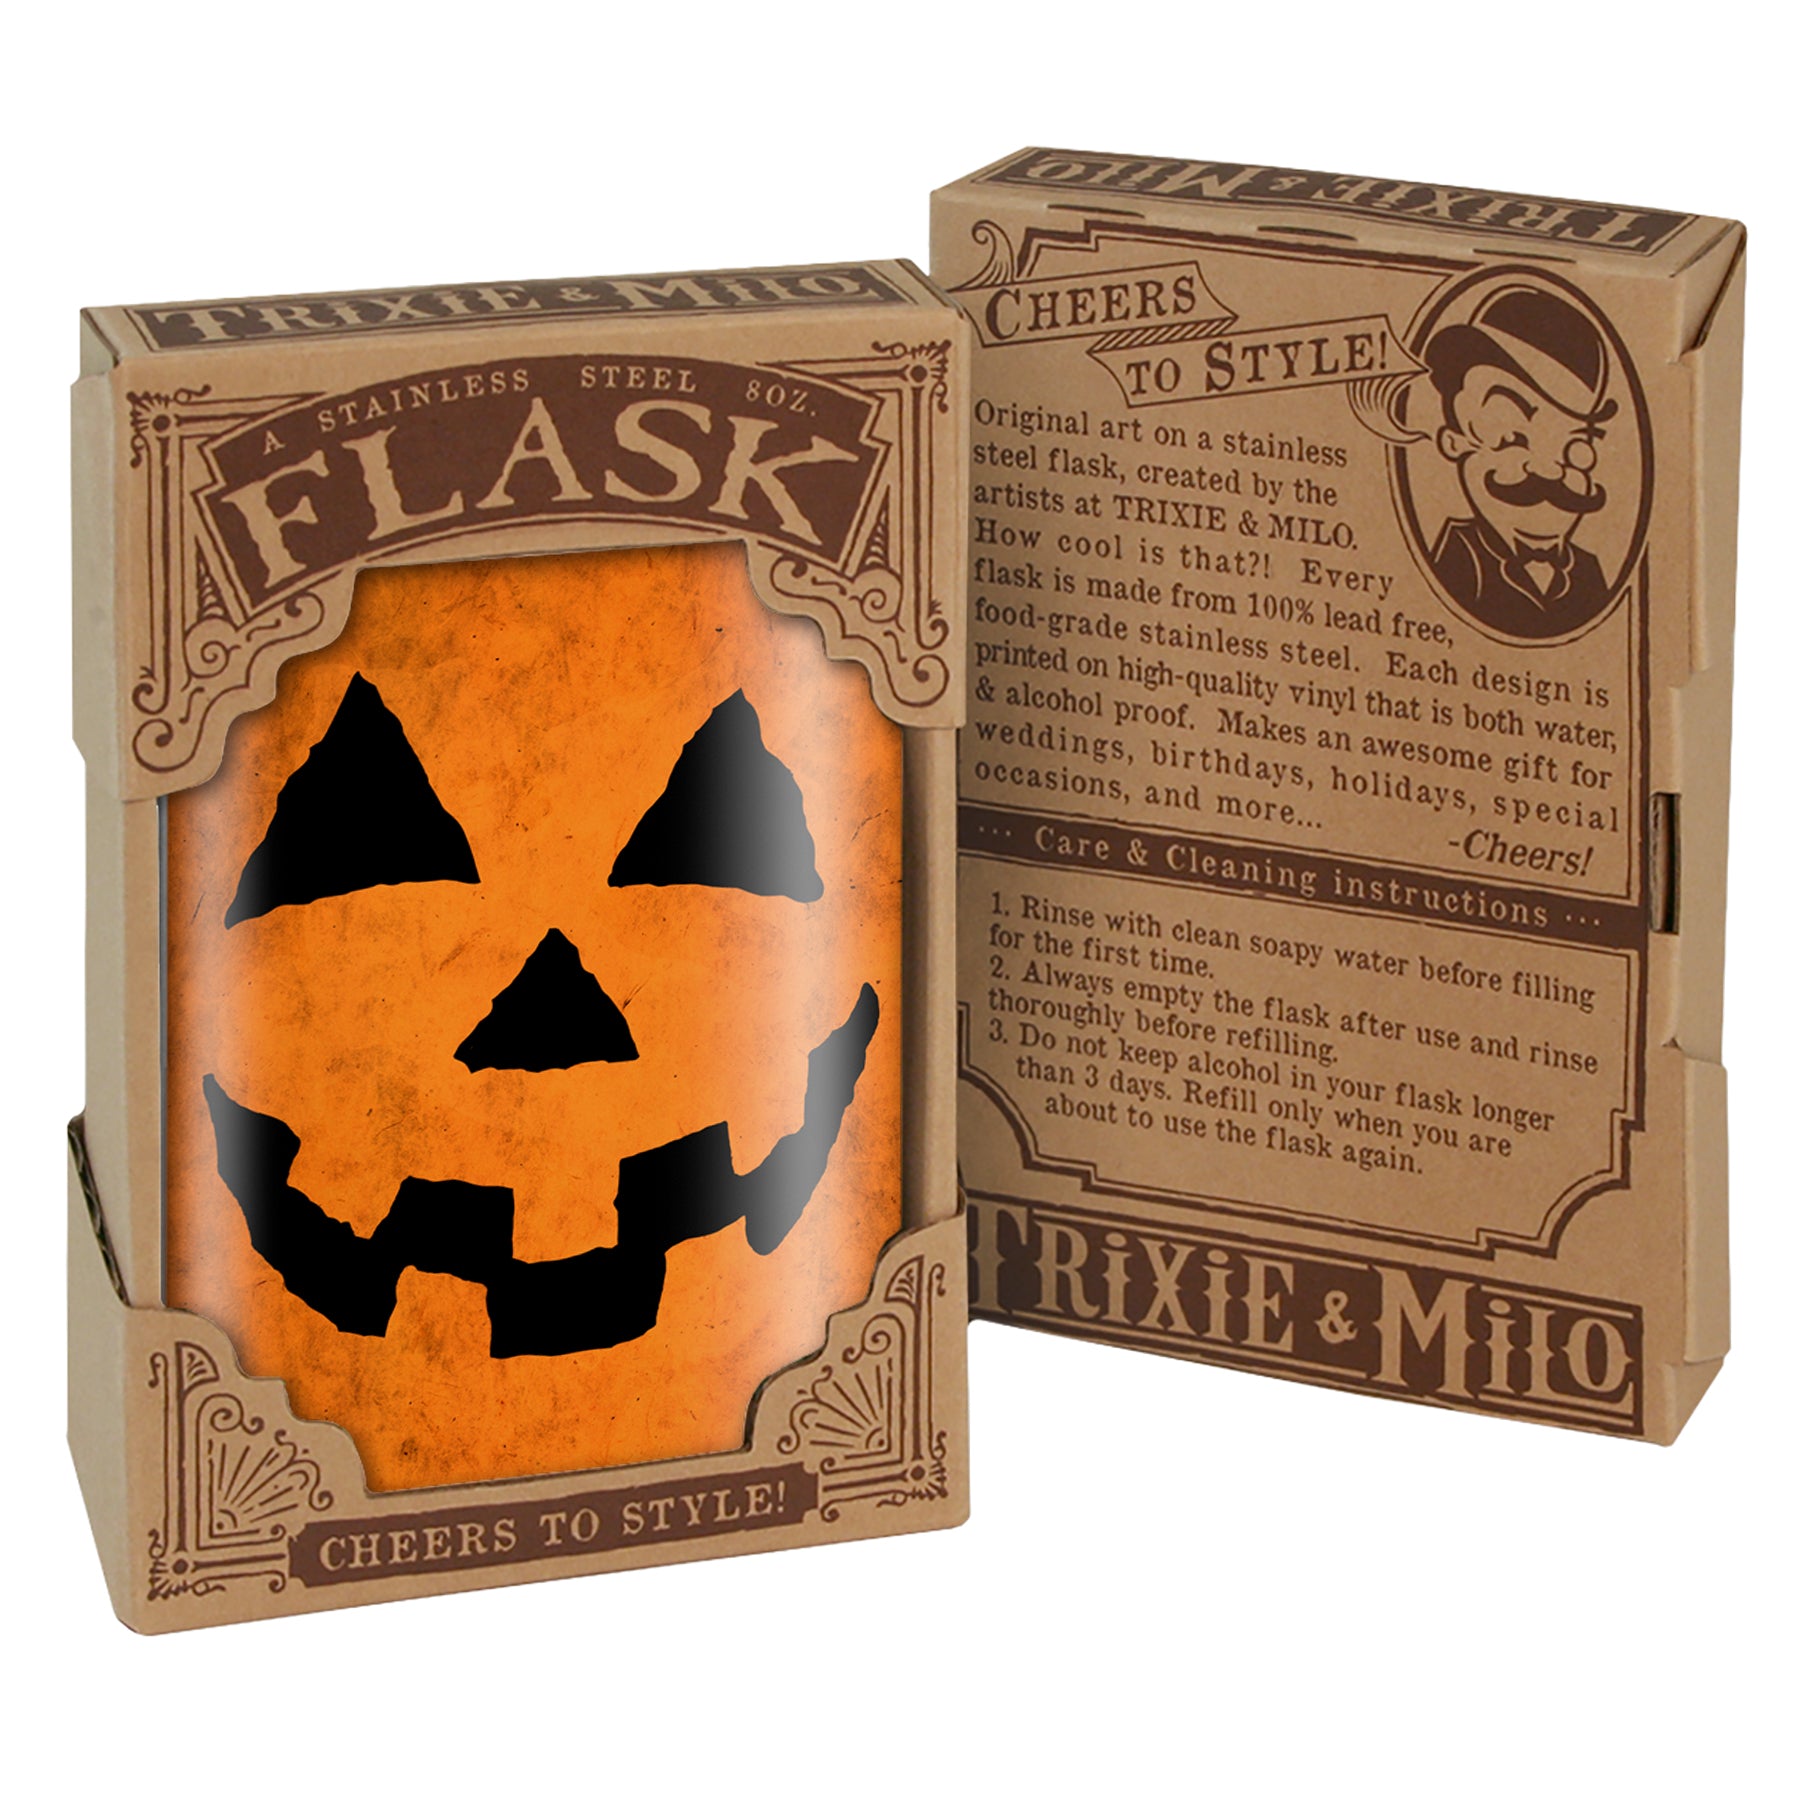 Flask: Jack-o'-Lantern, Halloween Pumpkin